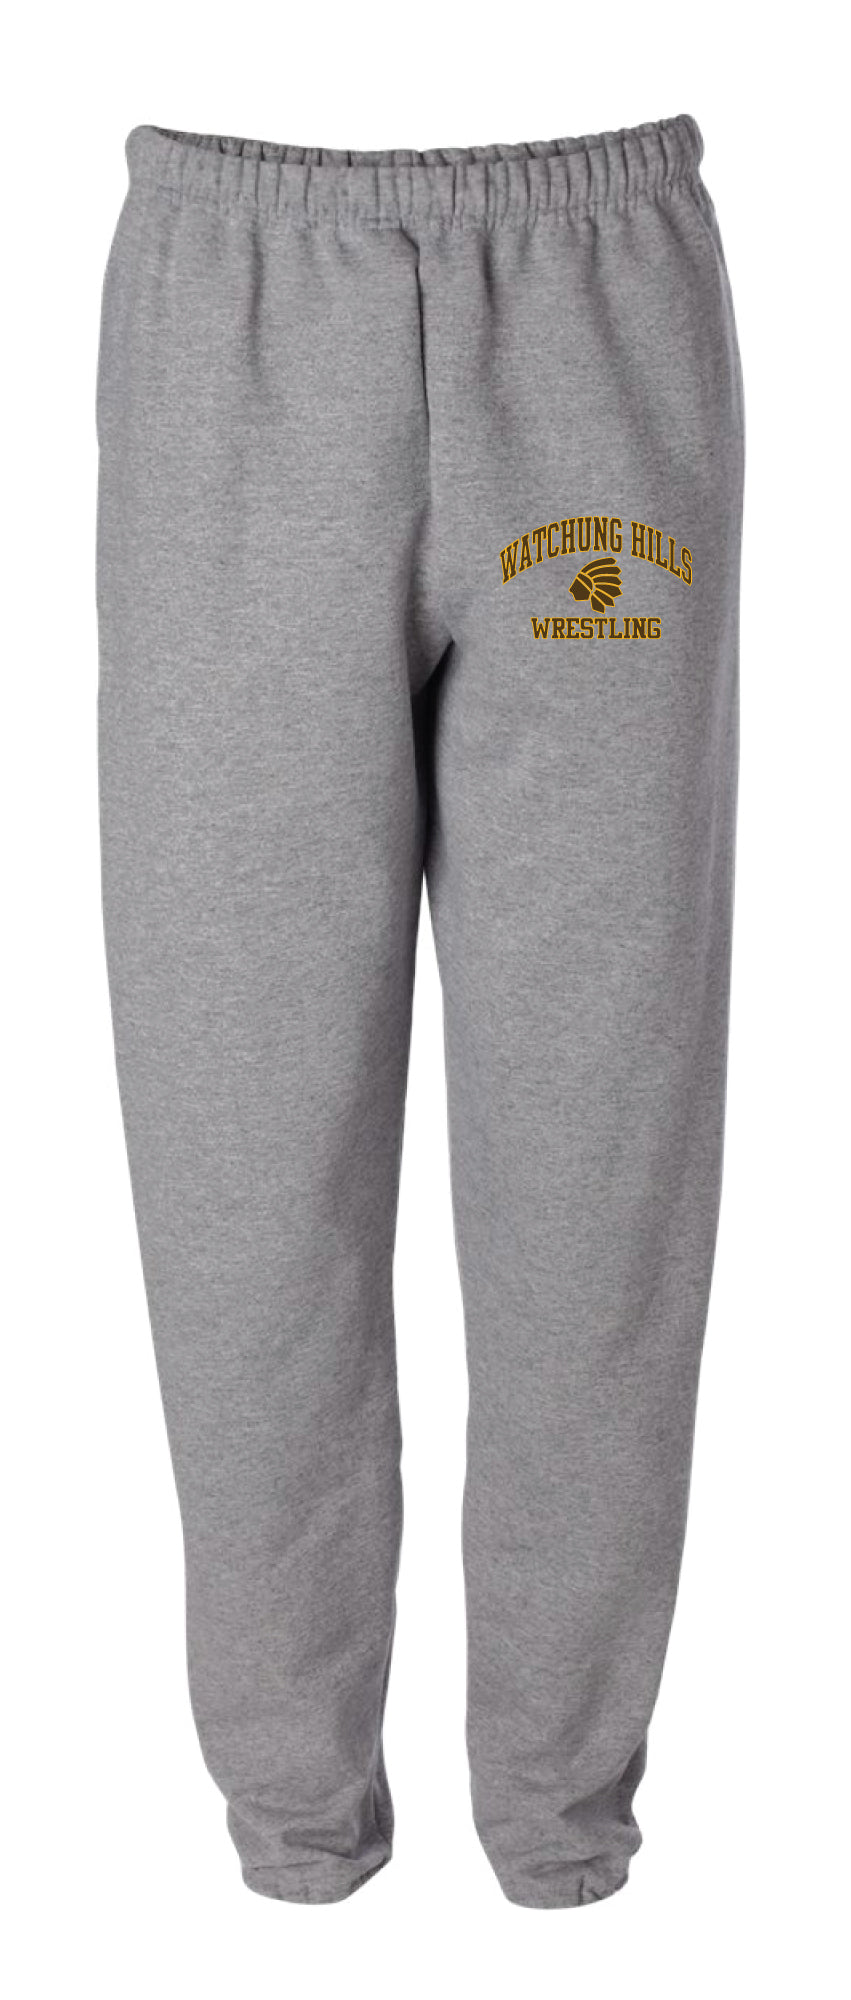 Watchung Hills Wrestling Cotton Sweatpants - Grey - 5KounT2018